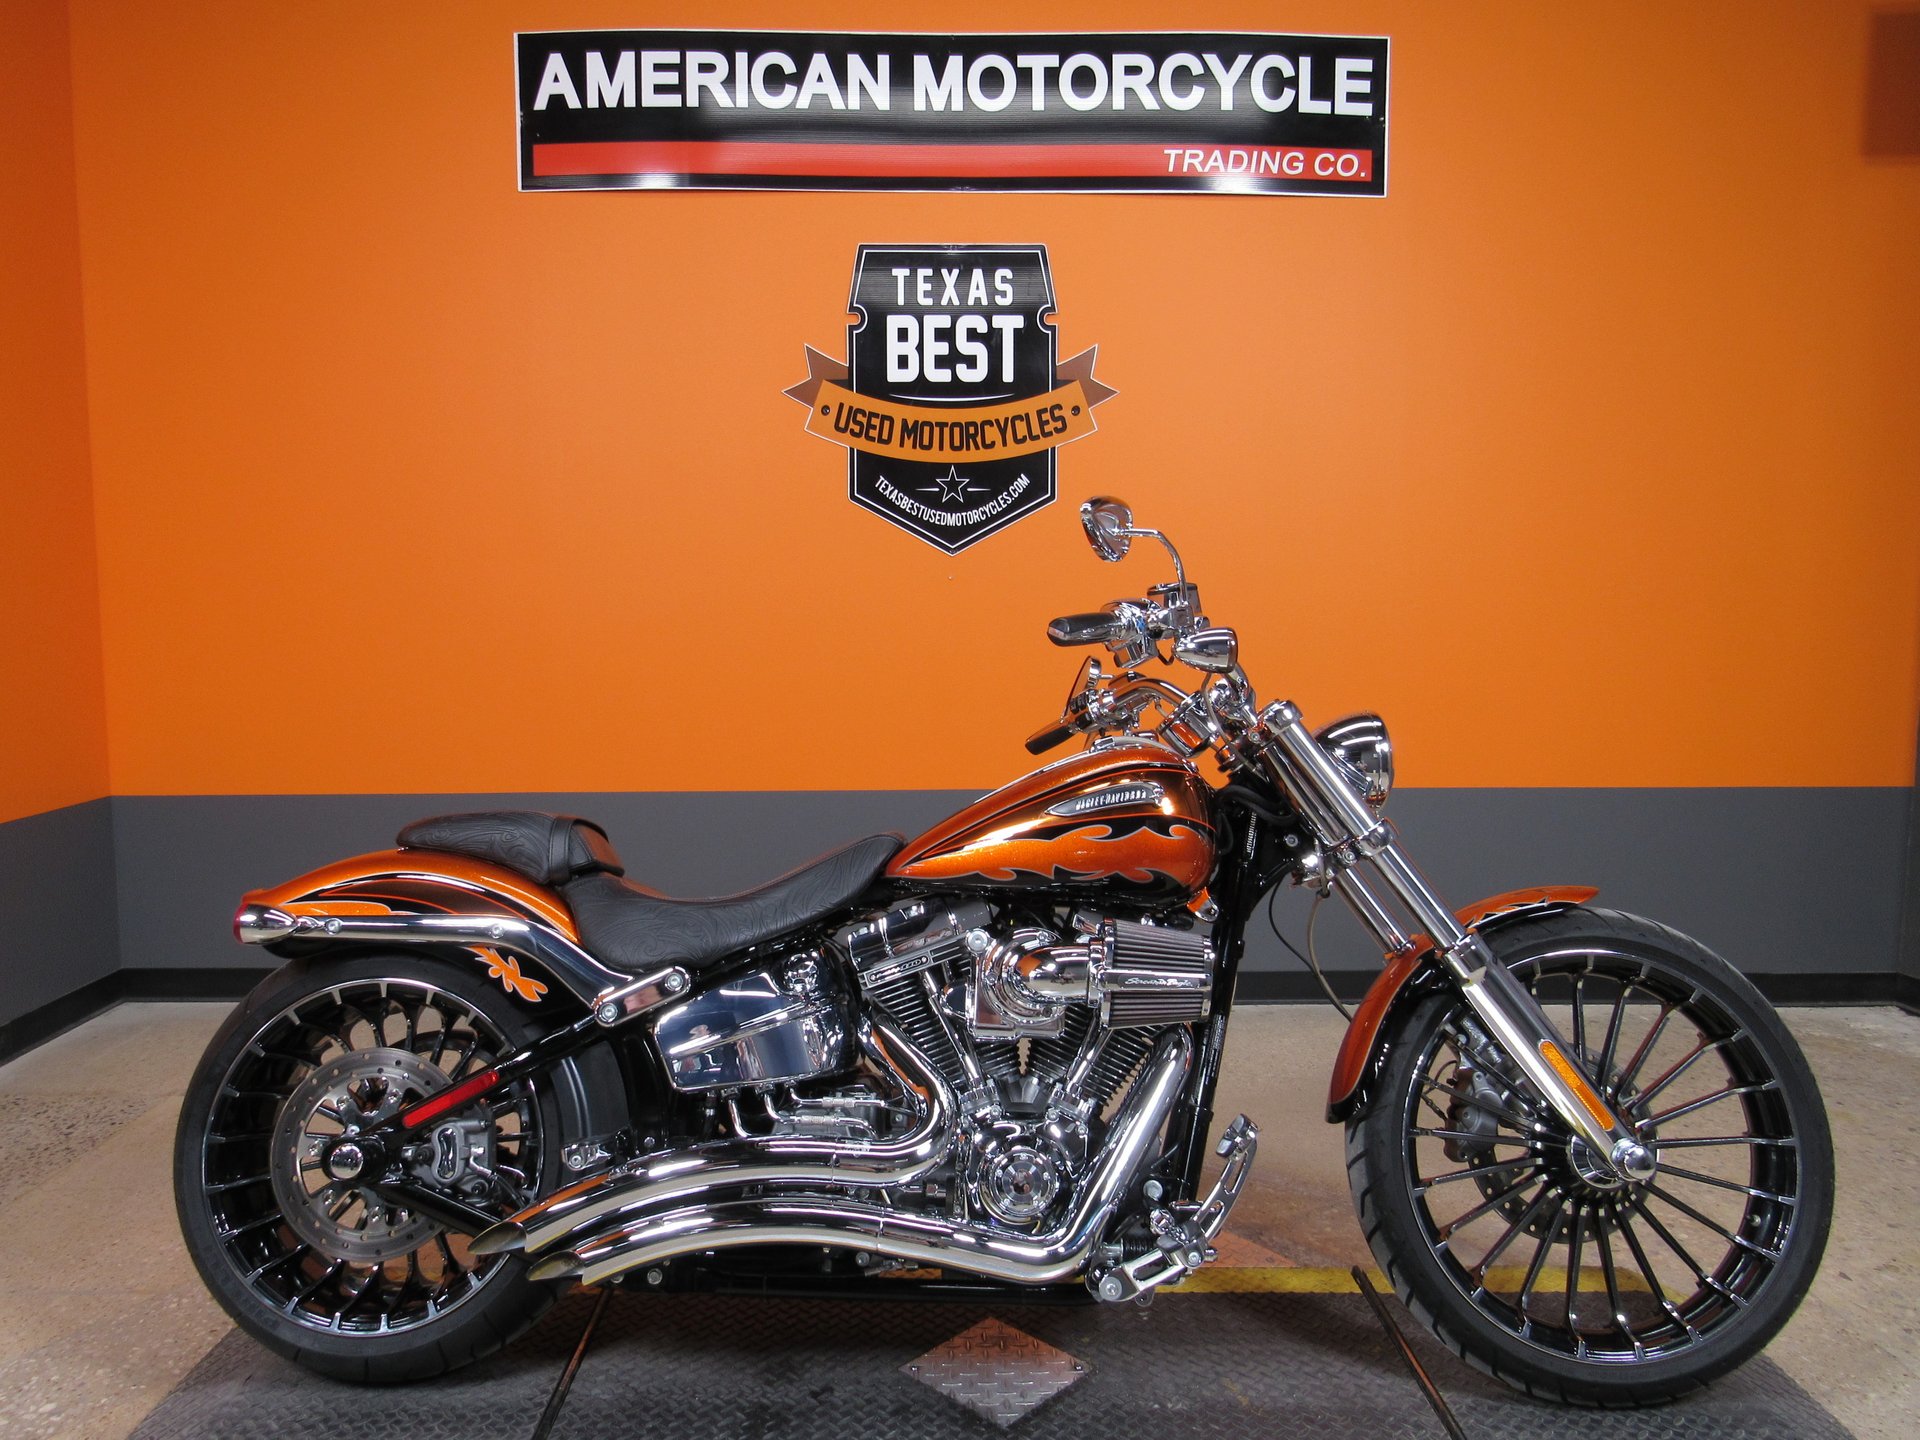 2014 Harley-Davidson CVO Softail Breakout | American Motorcycle Trading  Company - Used Harley Davidson Motorcycles